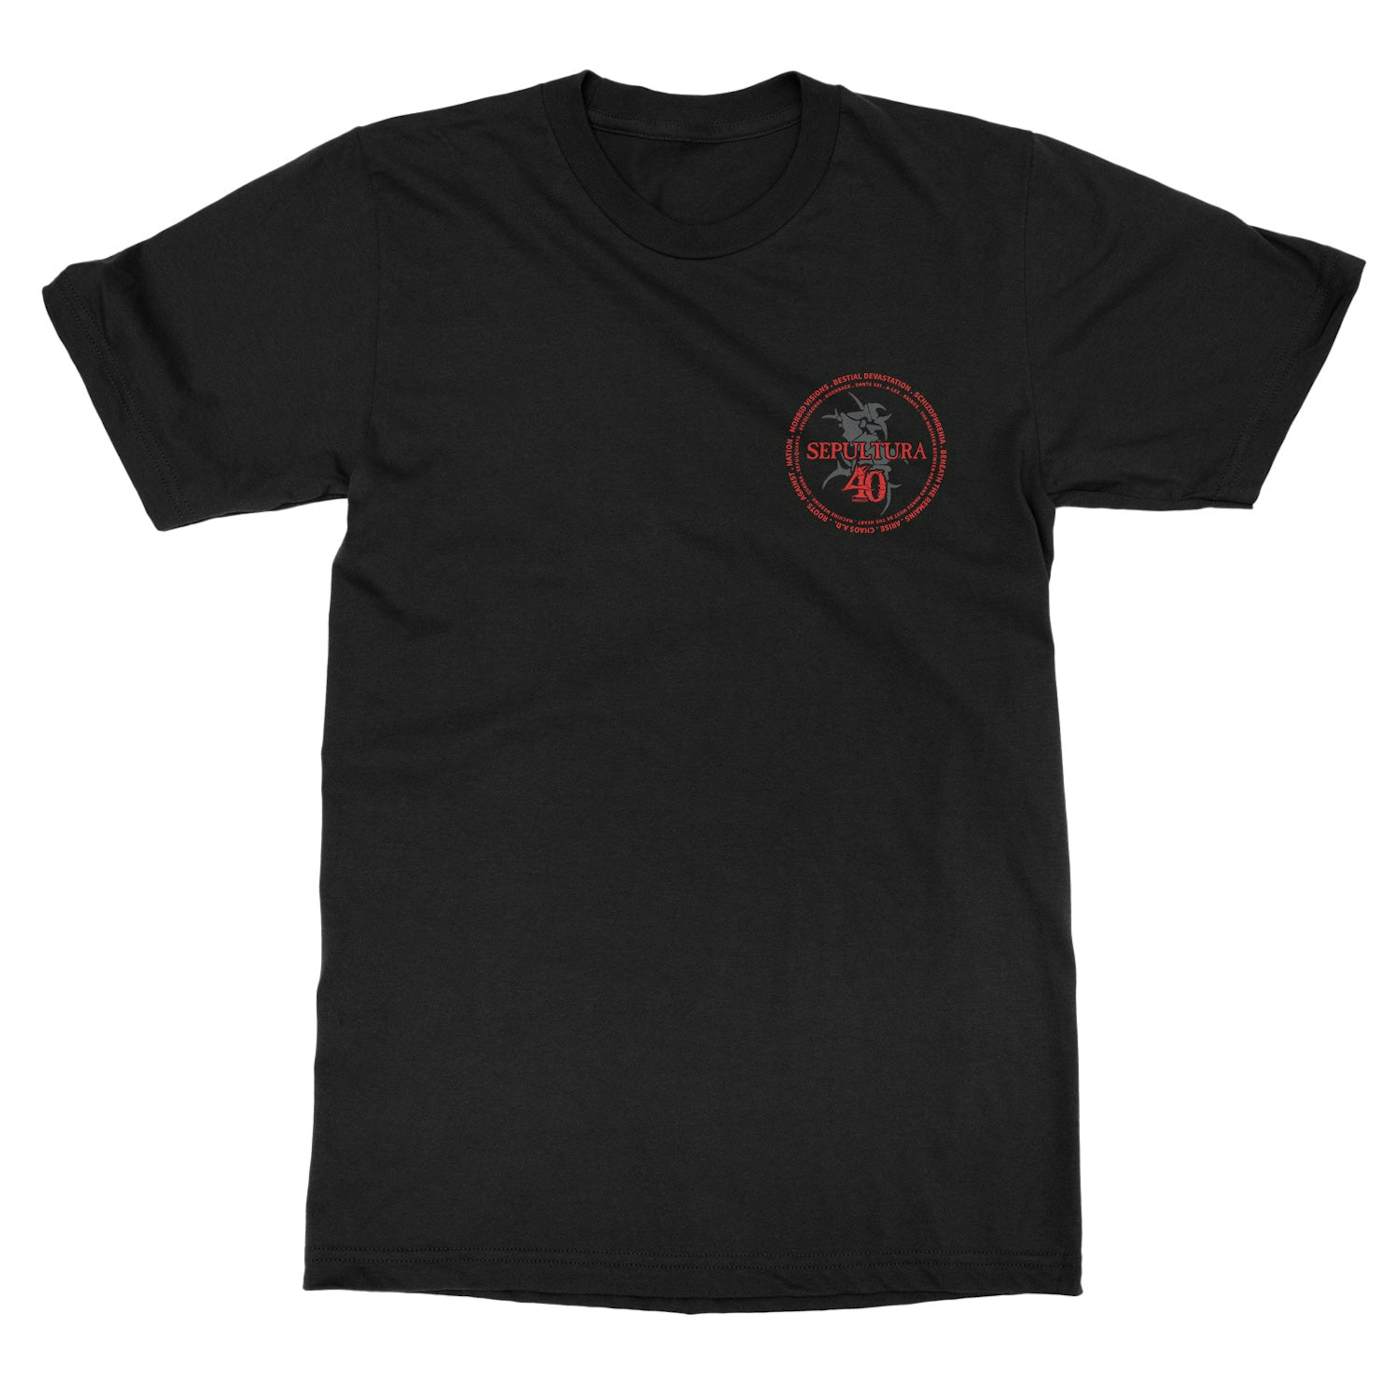 Sepultura "Celebrating Life Through Death" T-Shirt